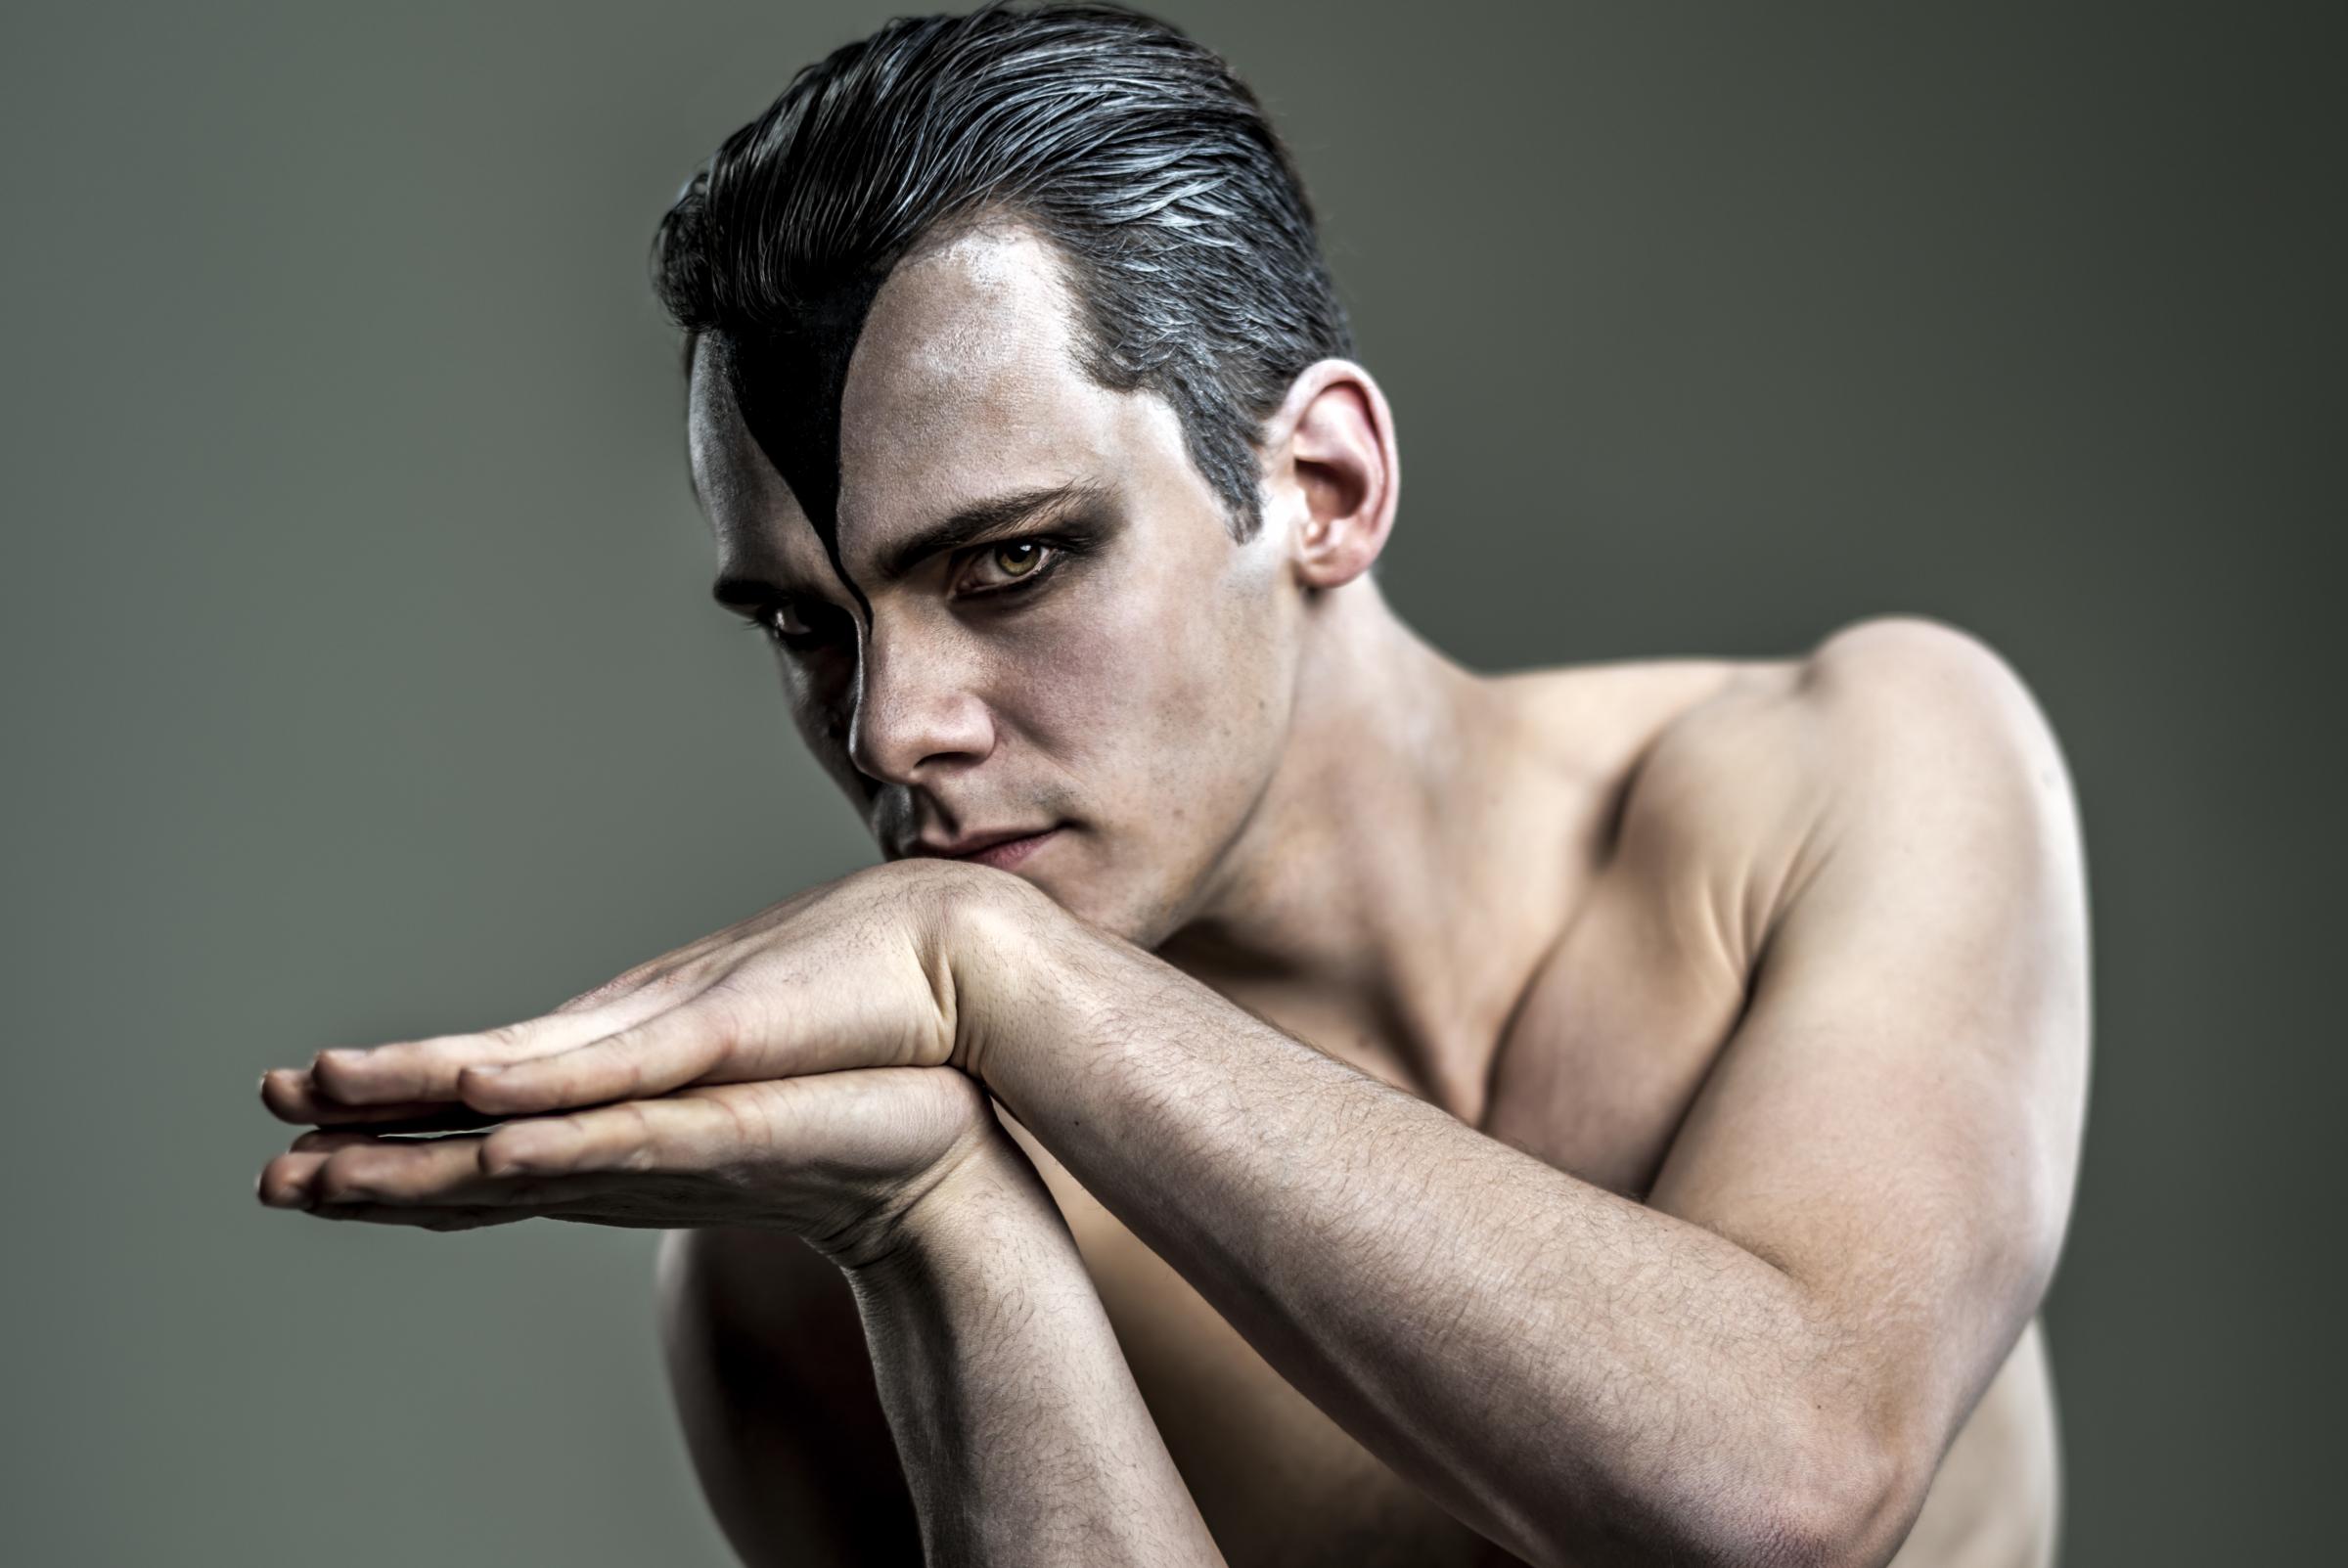 Tring-trained dancer to star in Matthew Bourne ballet